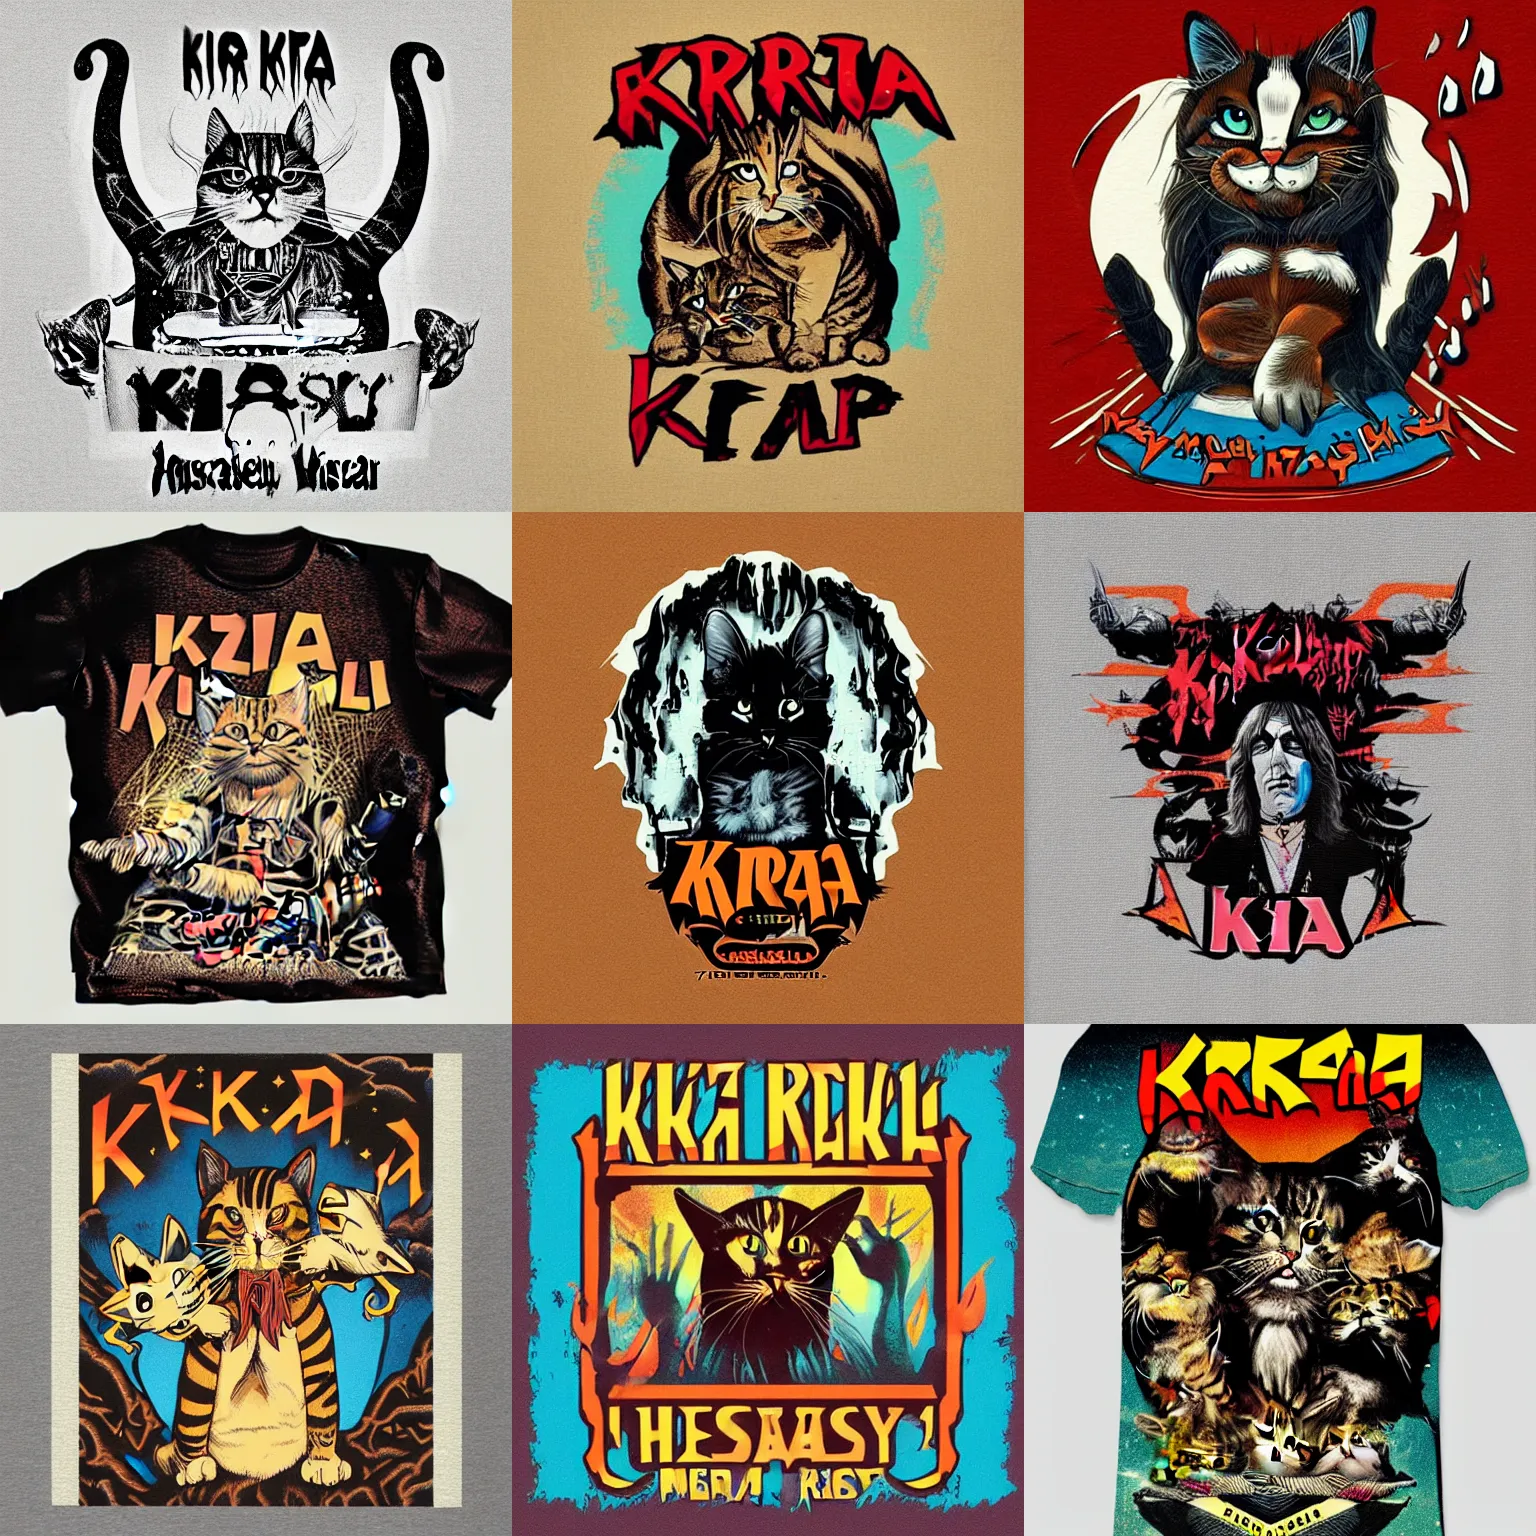 Prompt: 70s concert T-shirt design for heavy metal band “Kira” featuring tabby cat “Kira”, masterpiece, trending on artstation